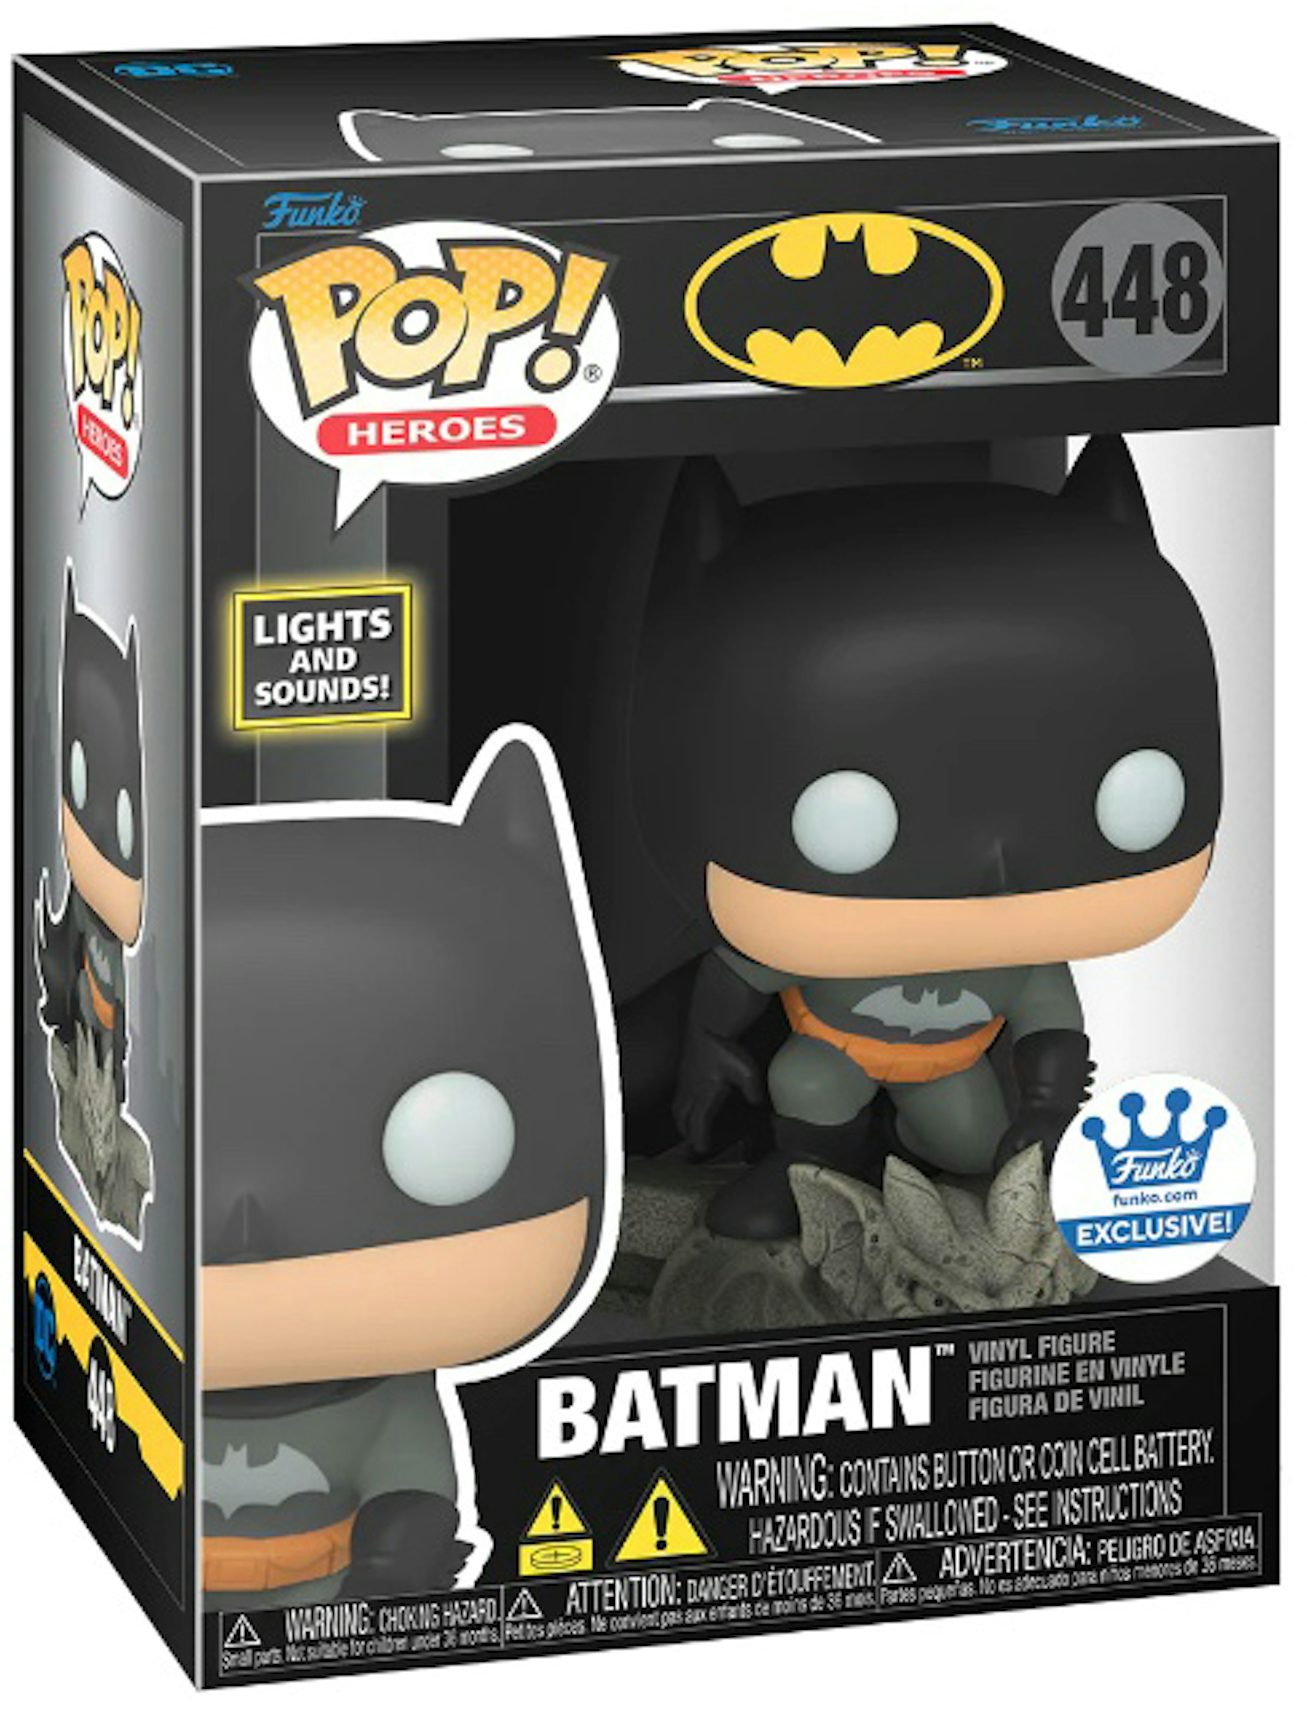 https://images.stockx.com/images/Funko-Pop-Heroes-Batman-With-Lights-and-Sounds-Funko-Shop-Exclusive-Figure-448.jpg?fit=fill&bg=FFFFFF&w=1200&h=857&fm=jpg&auto=compress&dpr=2&trim=color&updated_at=1666845248&q=60